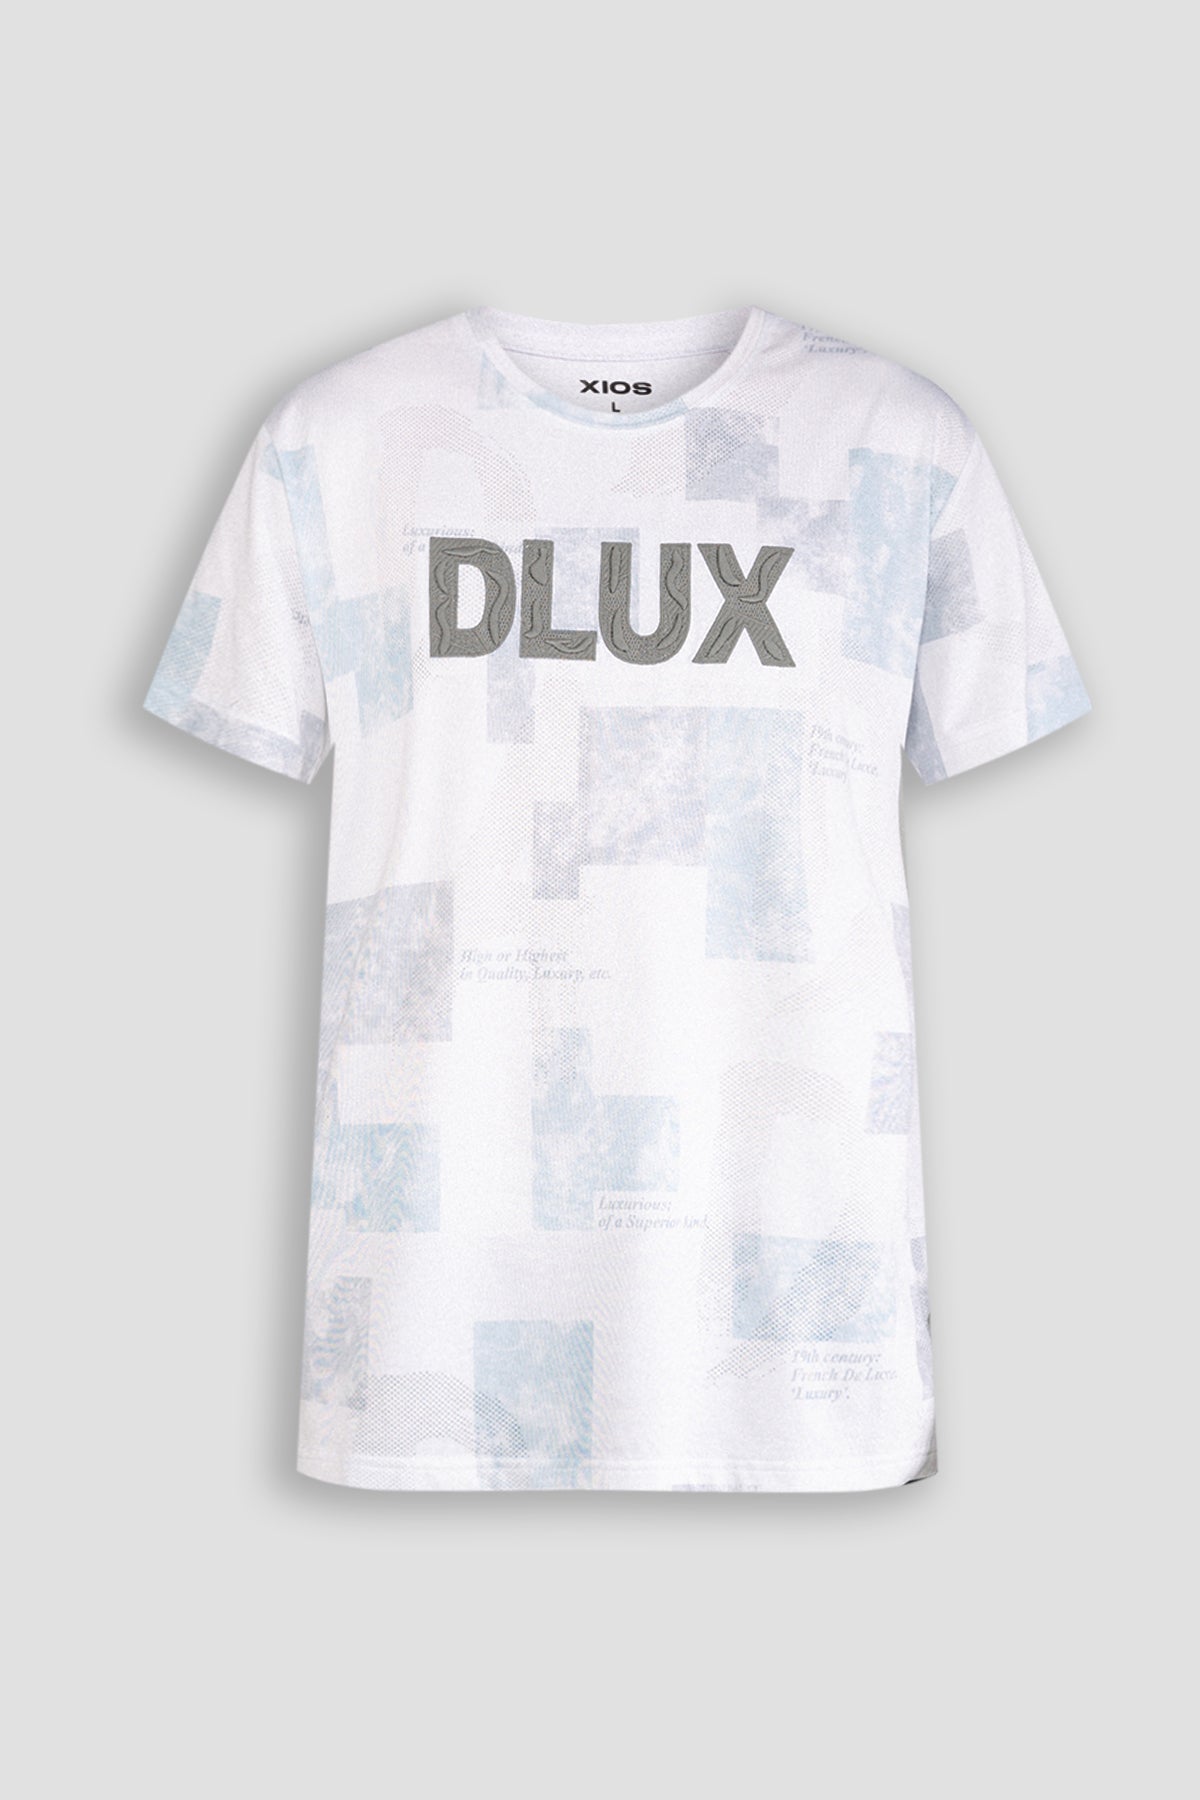 "Dlux" Graphic Tee